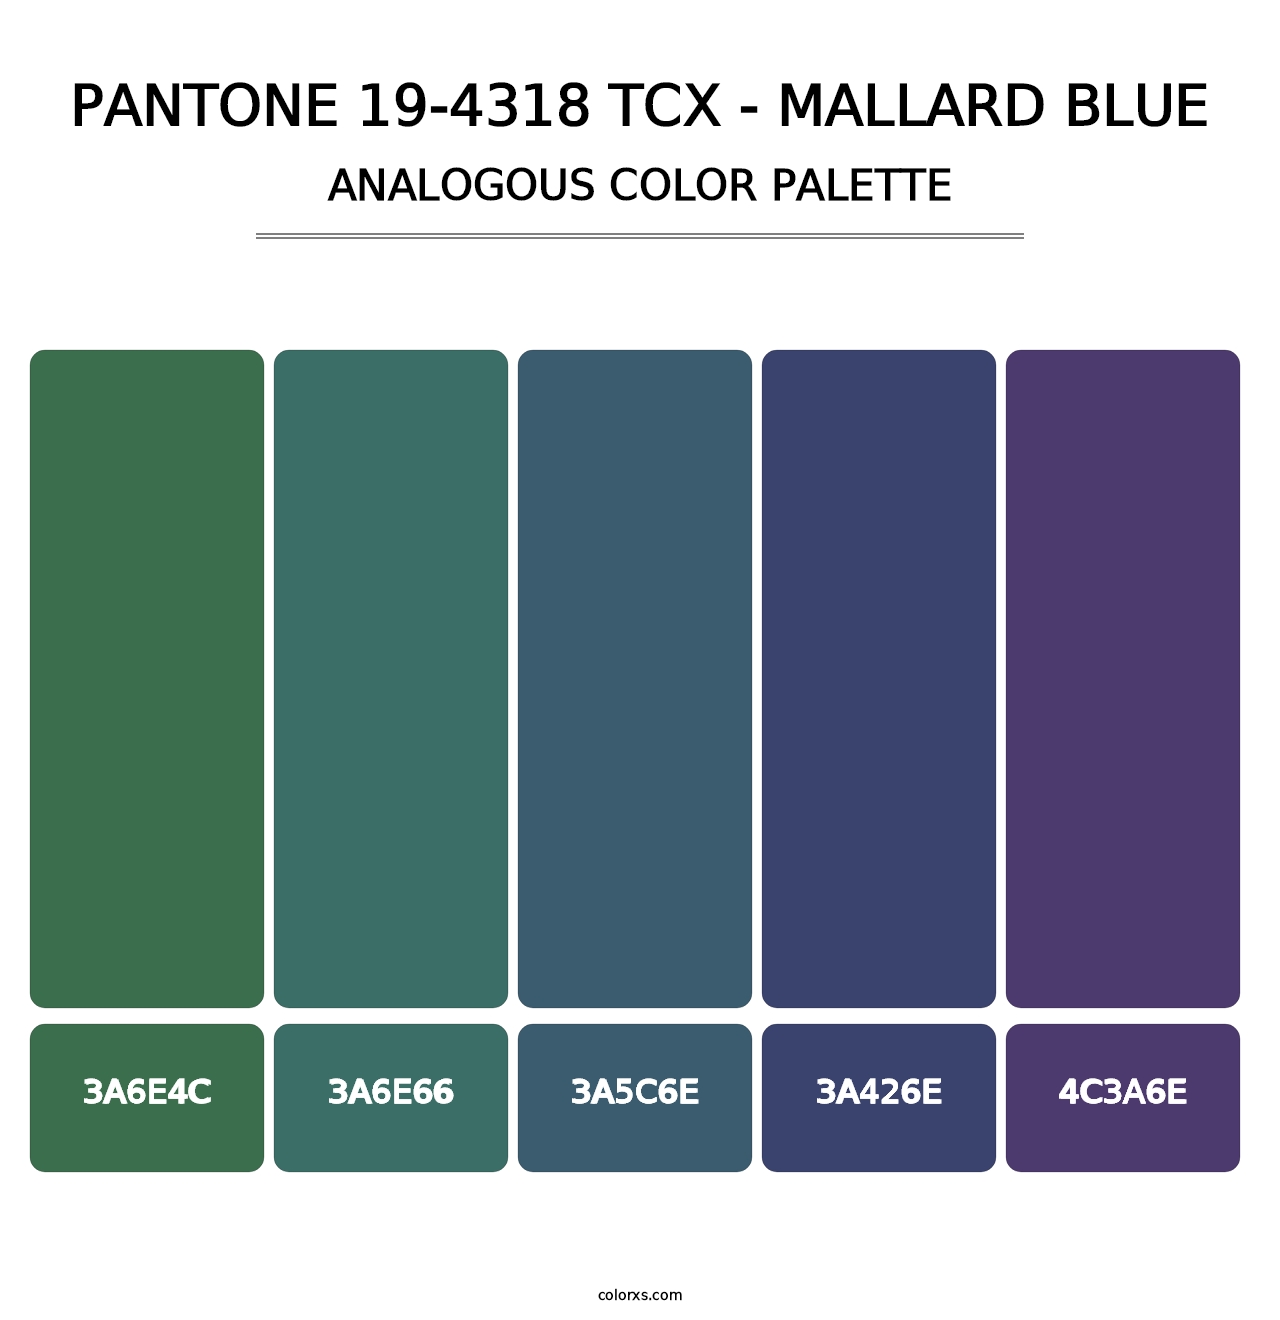 PANTONE 19-4318 TCX - Mallard Blue - Analogous Color Palette